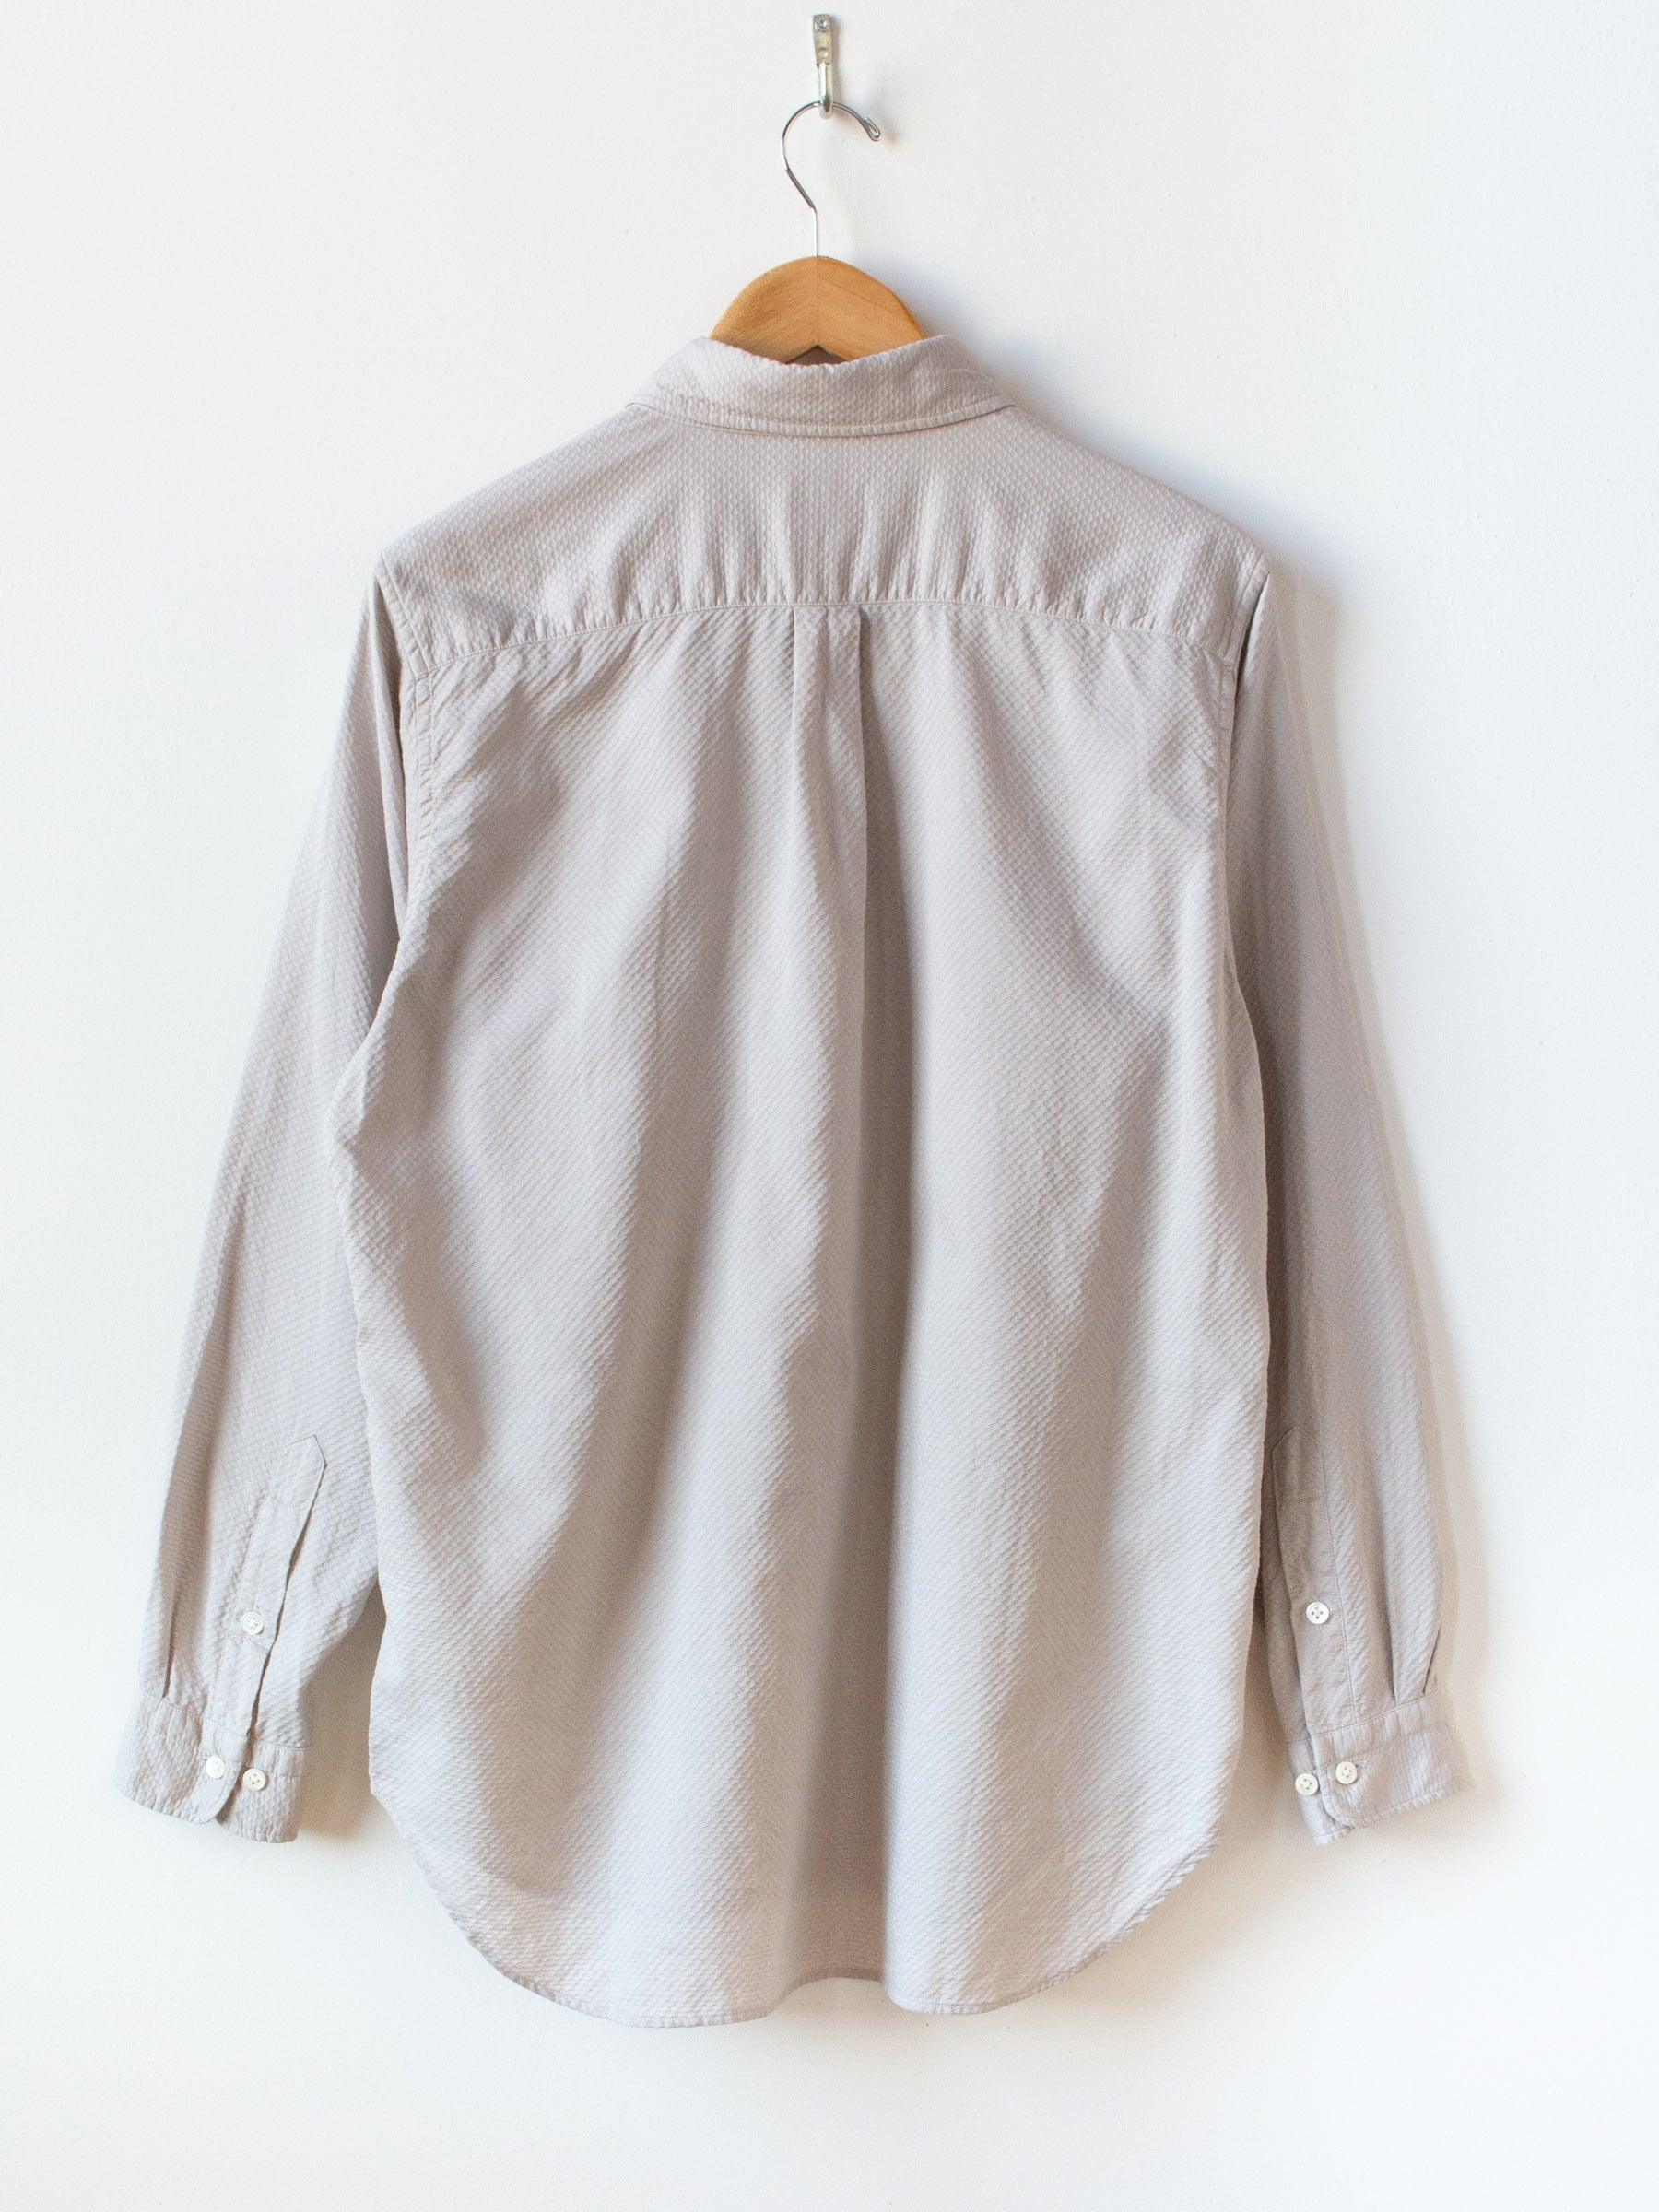 Namu Shop - ts(s) Garment Dyed Dobby Cloth BD Shirt - Greige